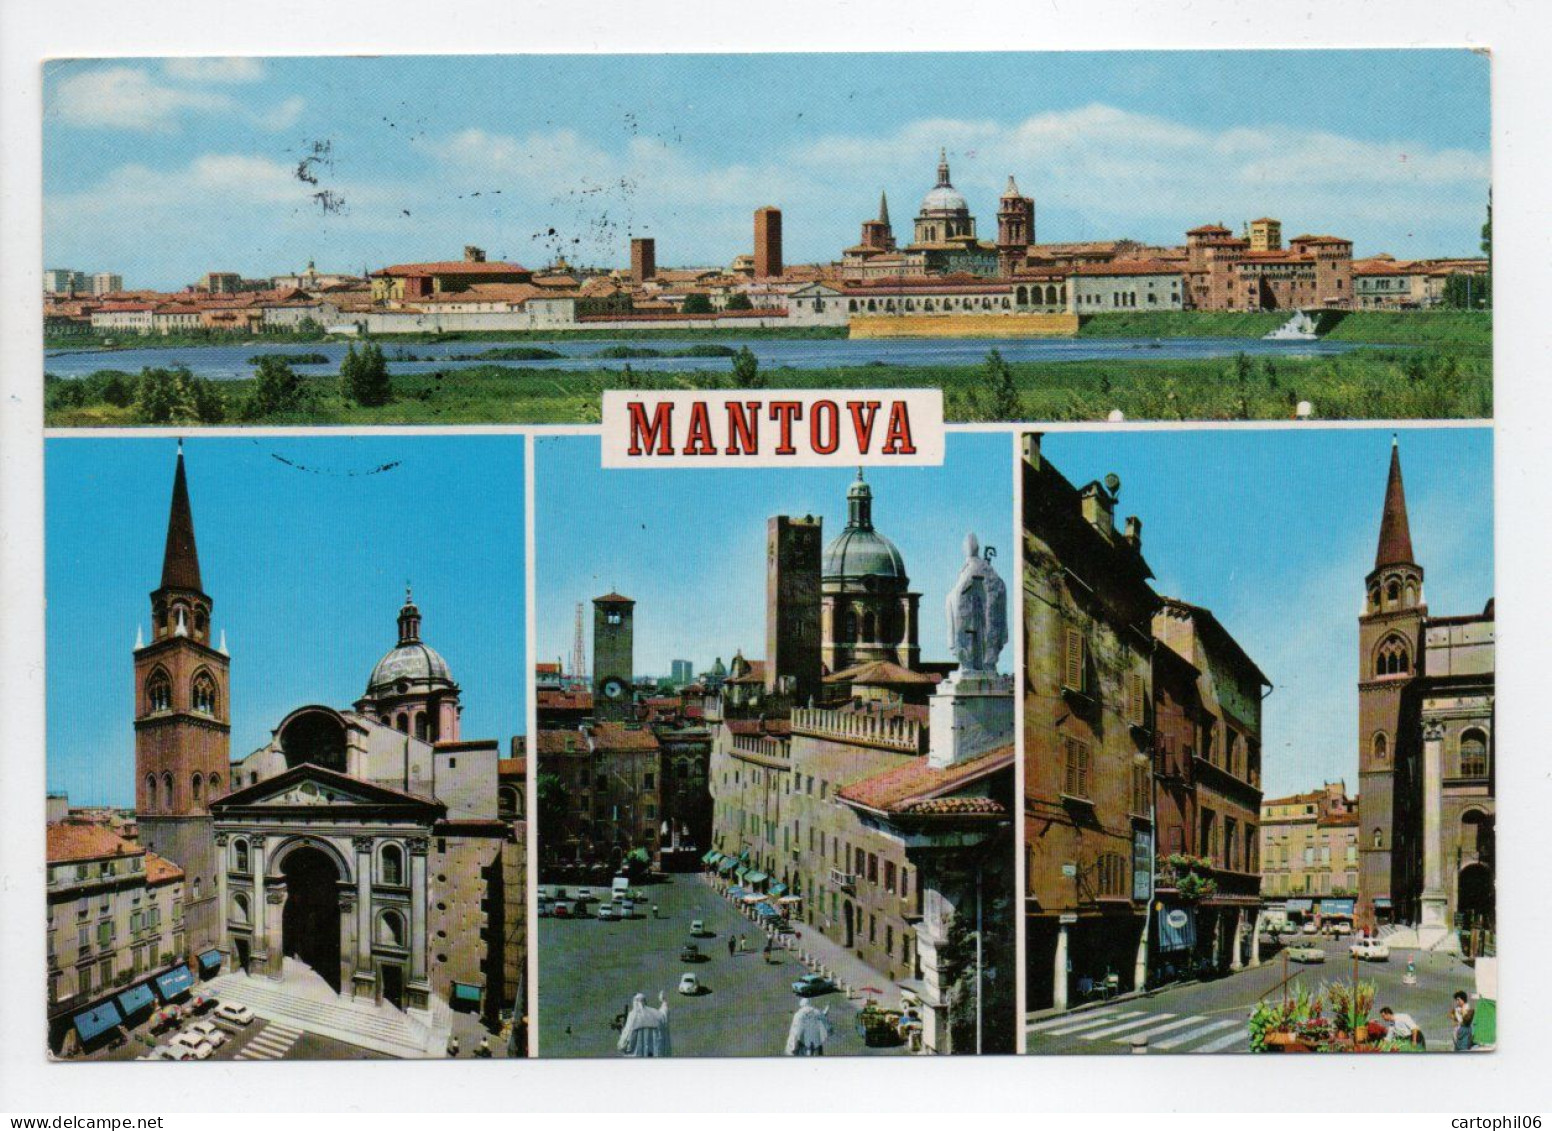 - Carte Postale MANTOVA (Italie) Pour SAINT-VIATRE (France) 19.4.1990 - TAXE A ETUDIER - - Strafport